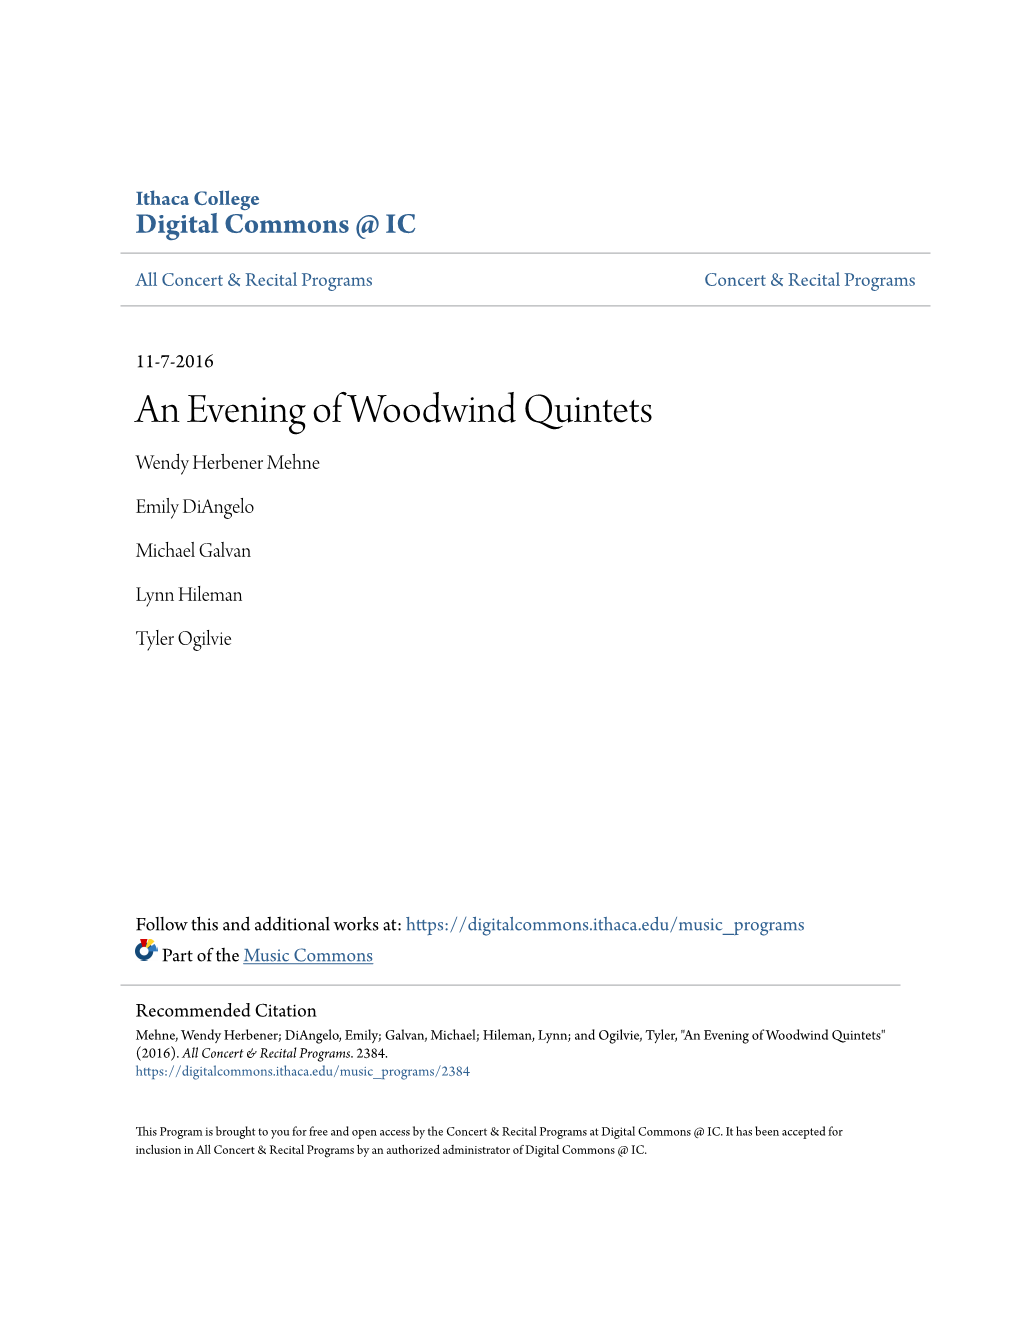 An Evening of Woodwind Quintets Wendy Herbener Mehne